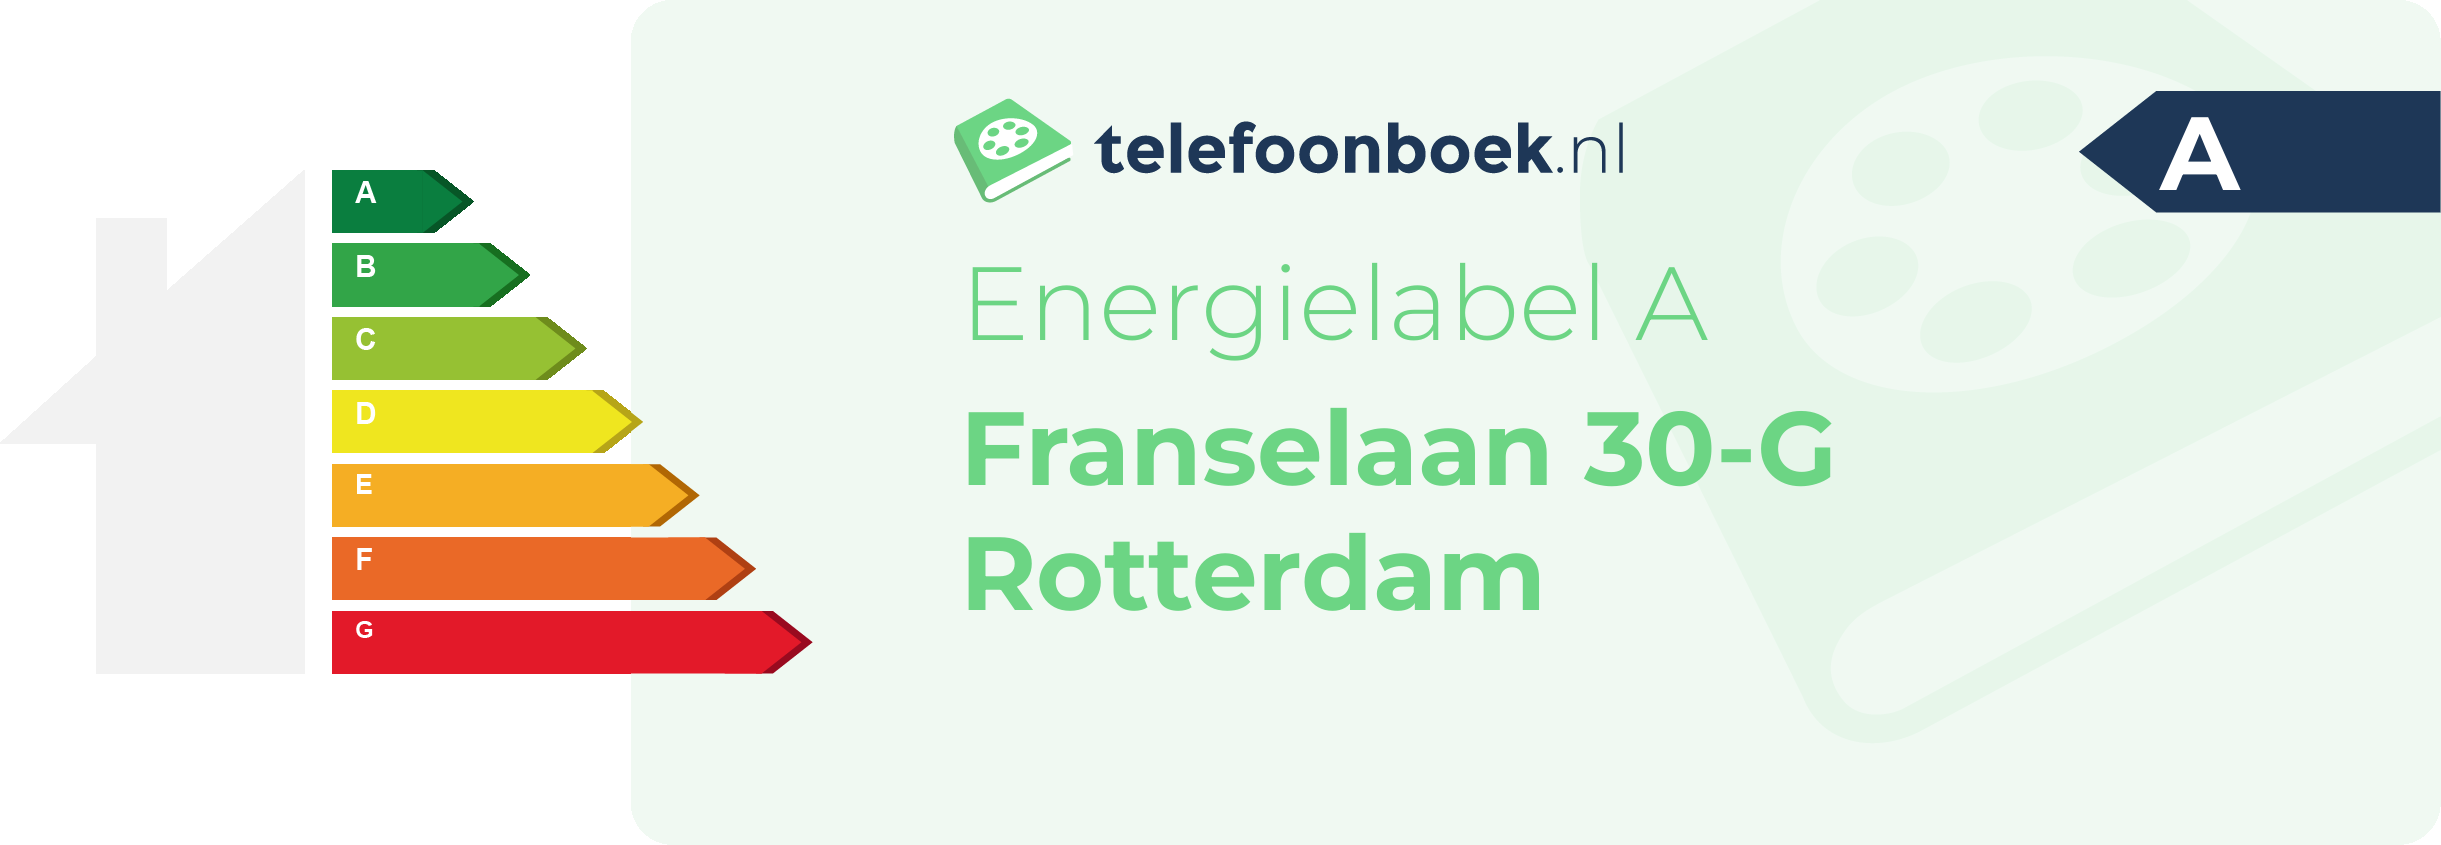 Energielabel Franselaan 30-G Rotterdam